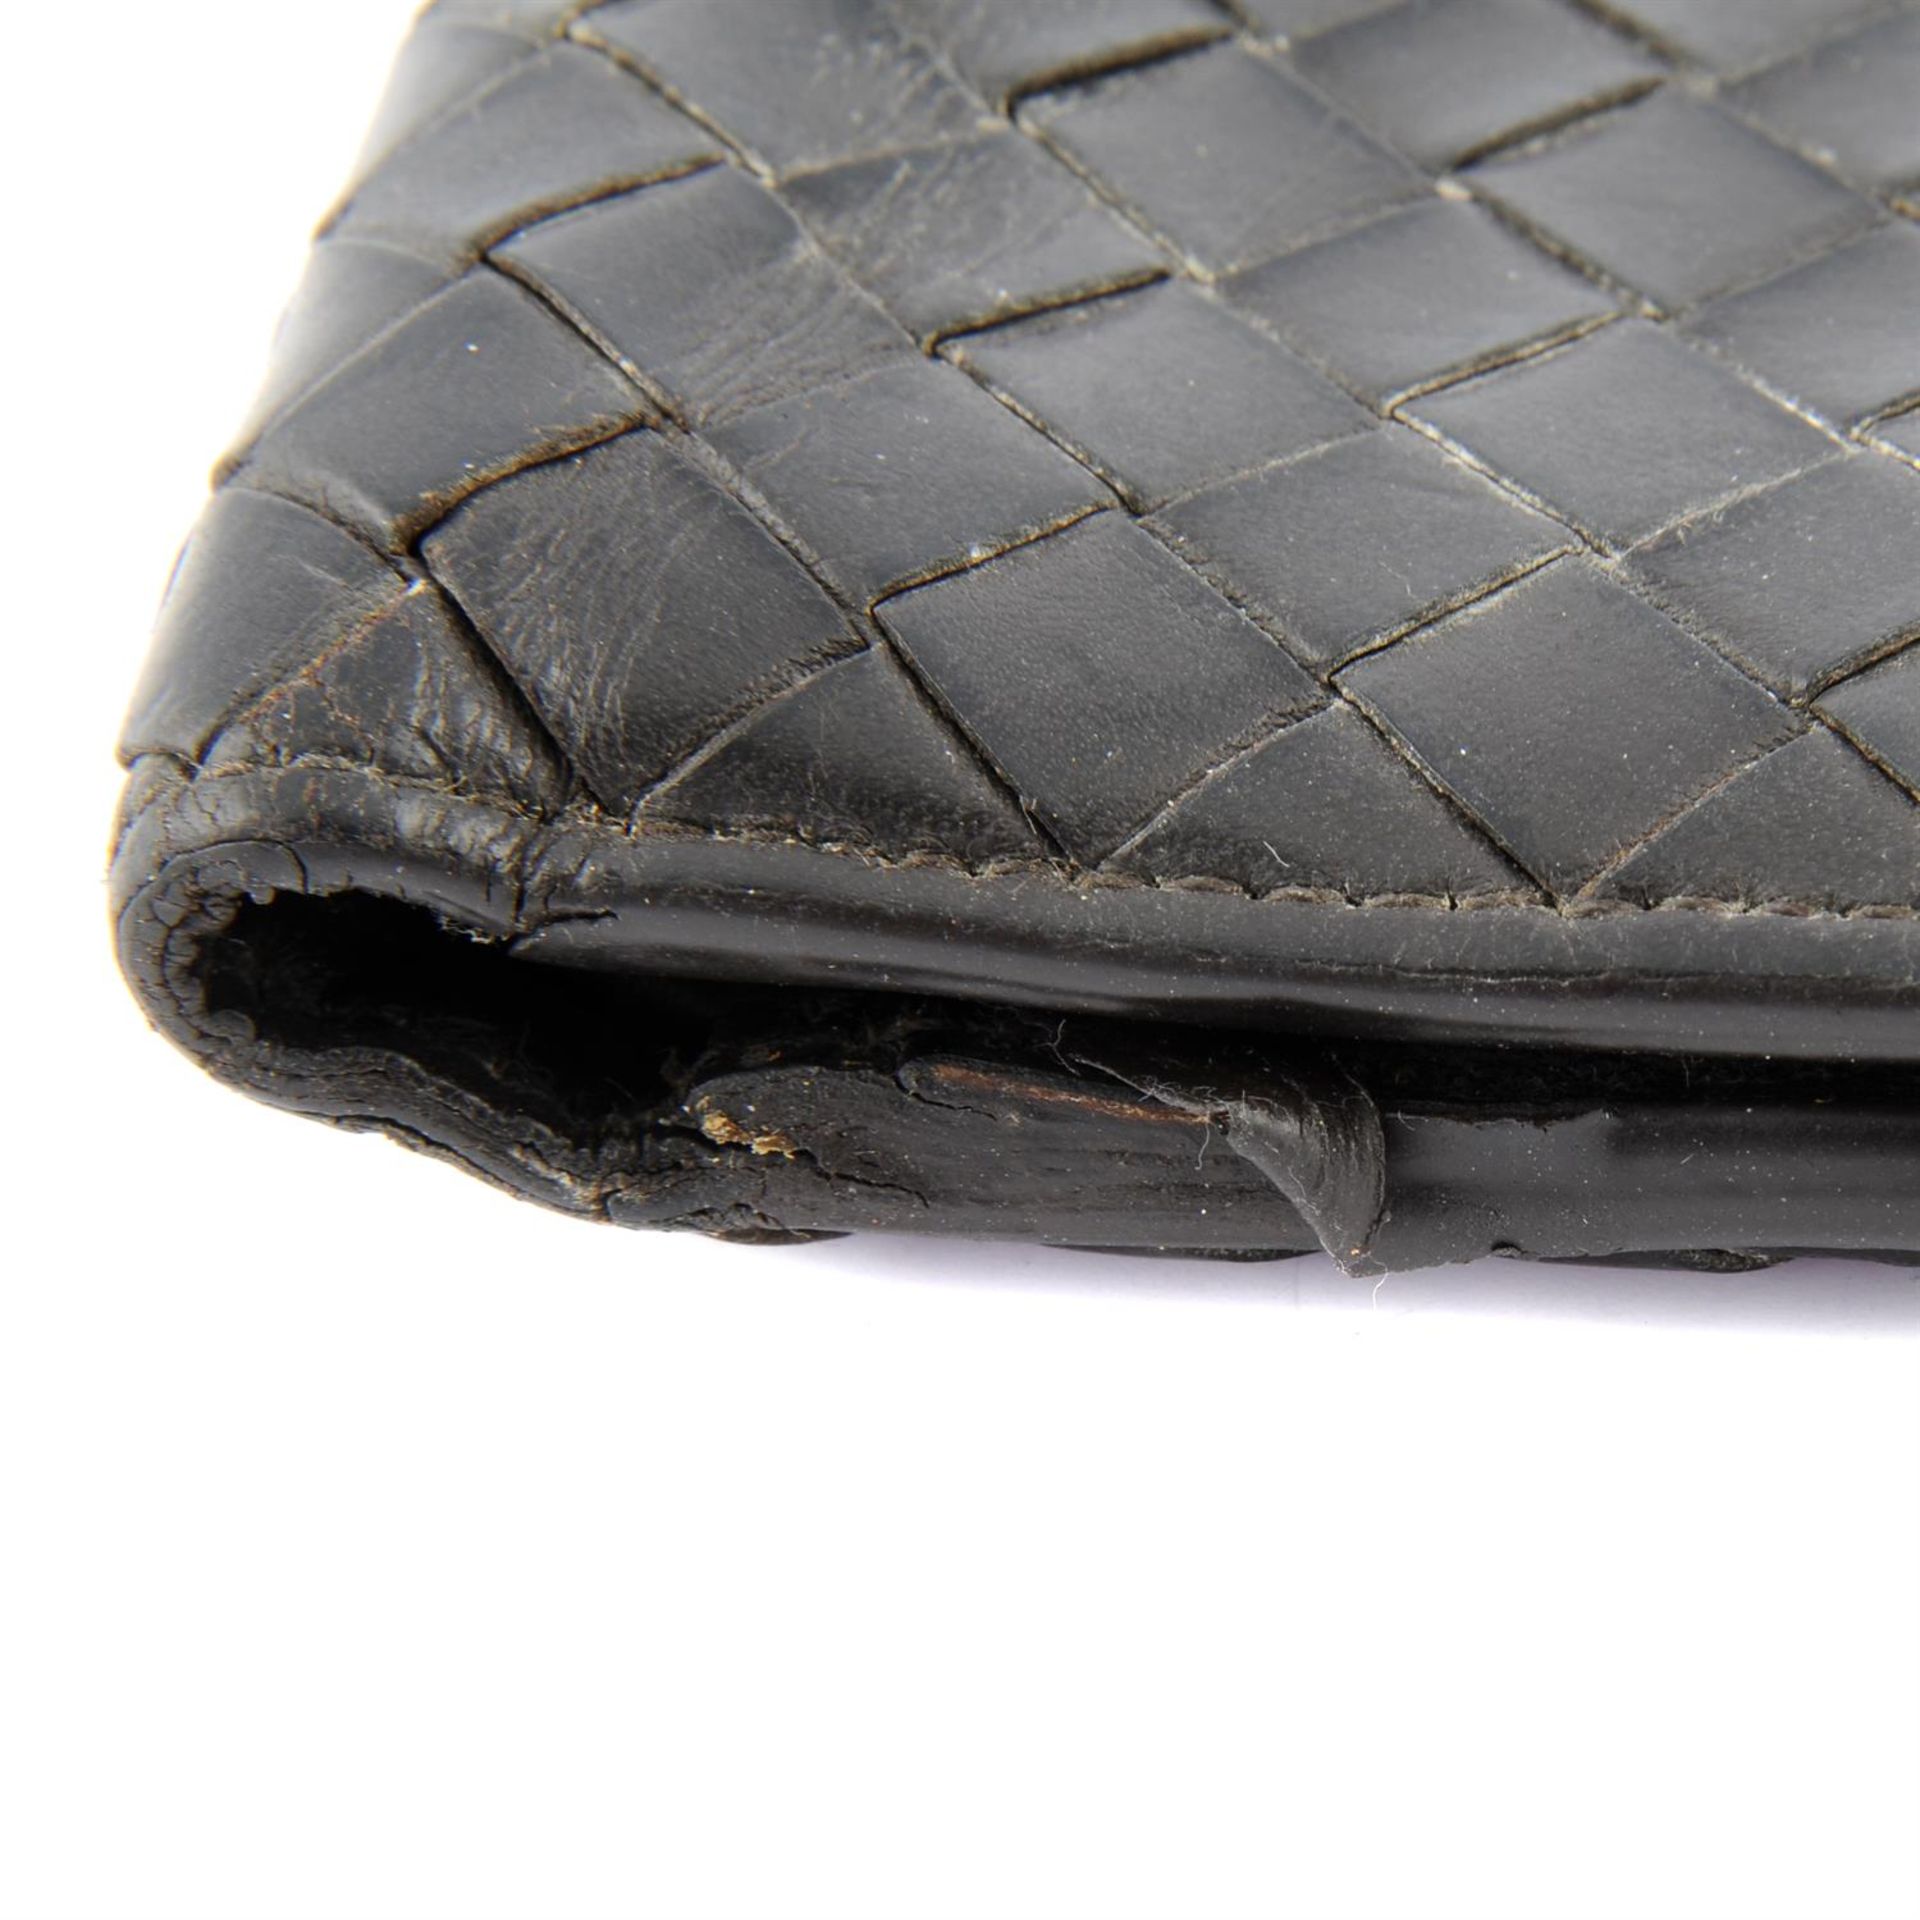 BOTTEGA VENETA - a Intrecciato leather Bifold wallet. - Image 4 of 4